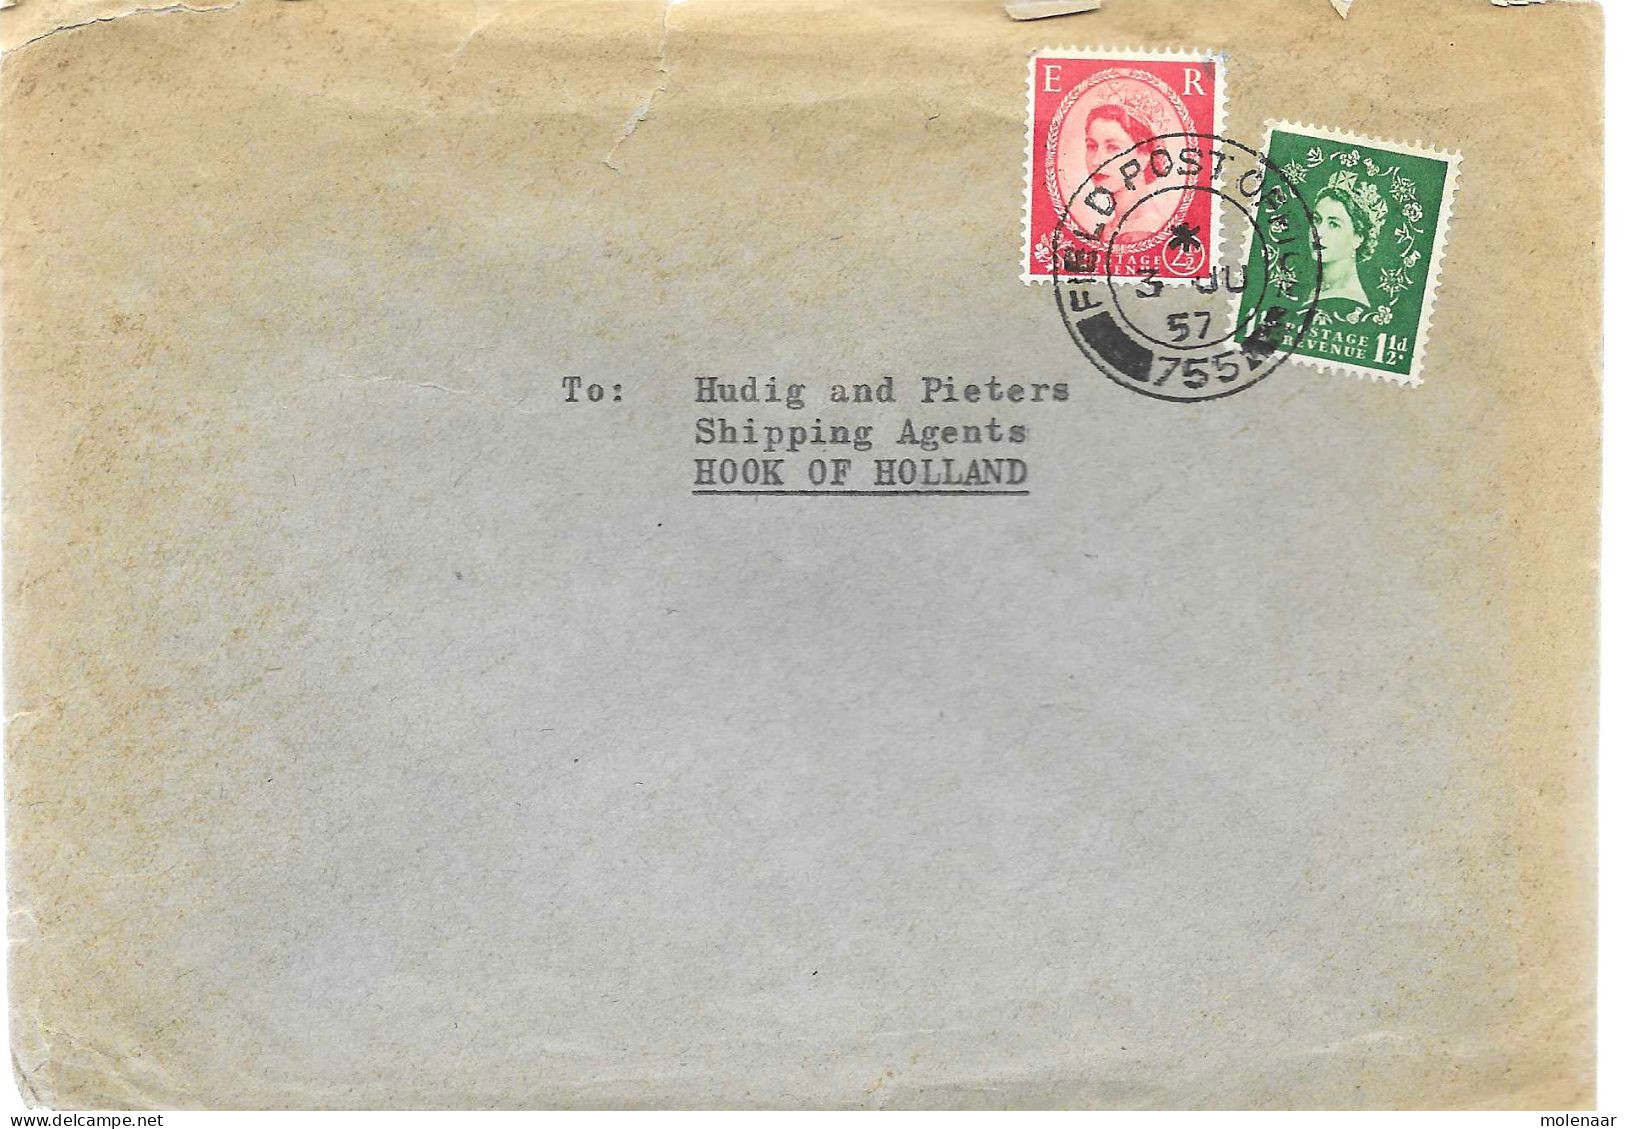 Postzegels > Europa > Groot-Brittannië >1952-2022 Elizabeth II >Brief Met No, 259-261 Field Post Office 755 (17500) - Covers & Documents